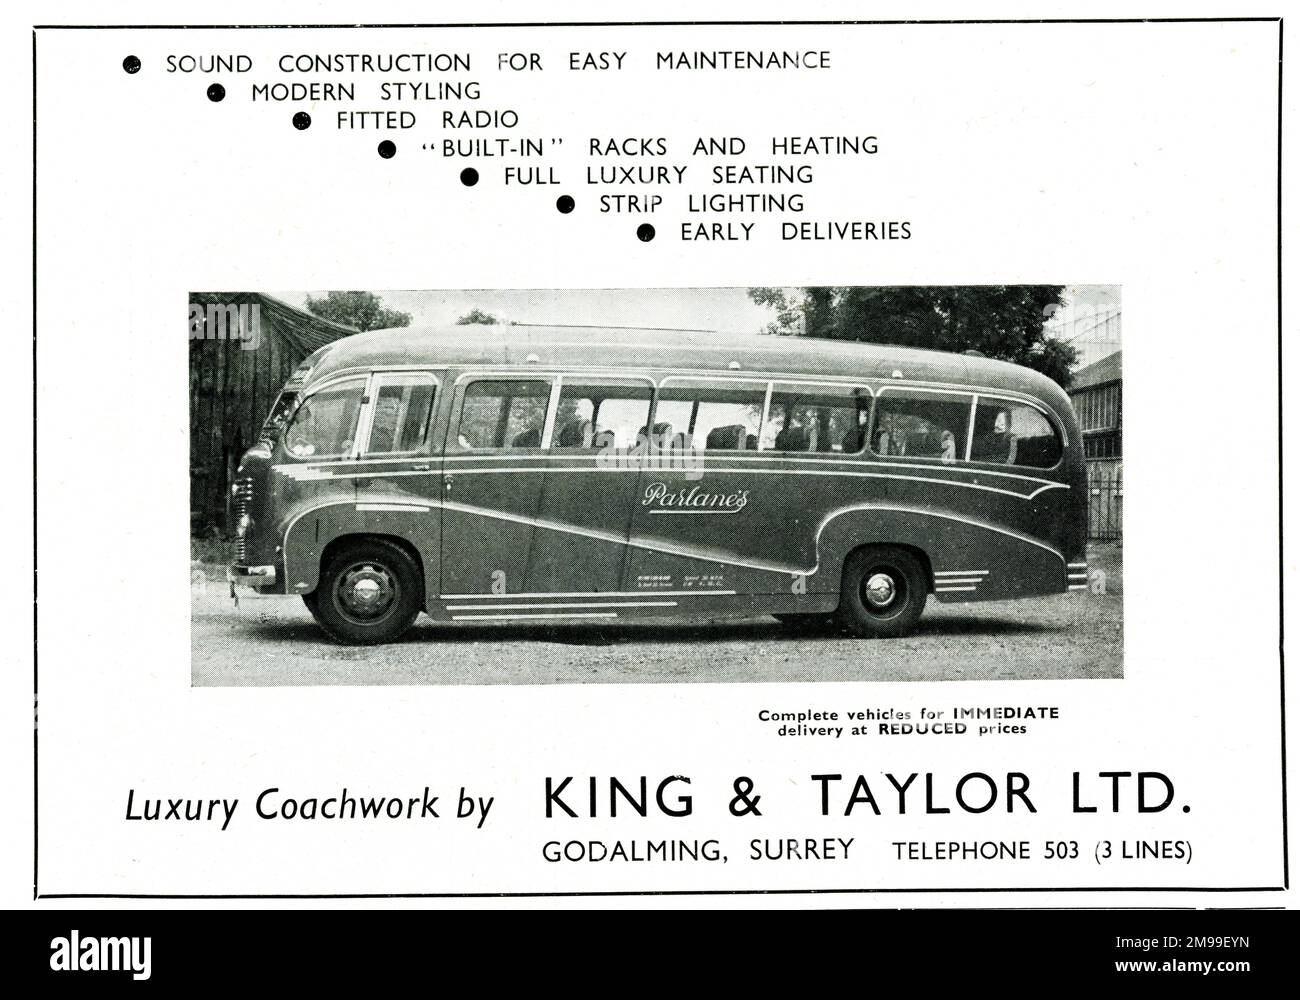 Advert, King & Taylor Ltd, Godalming, Surrey, luxury coachwork. Stock Photo